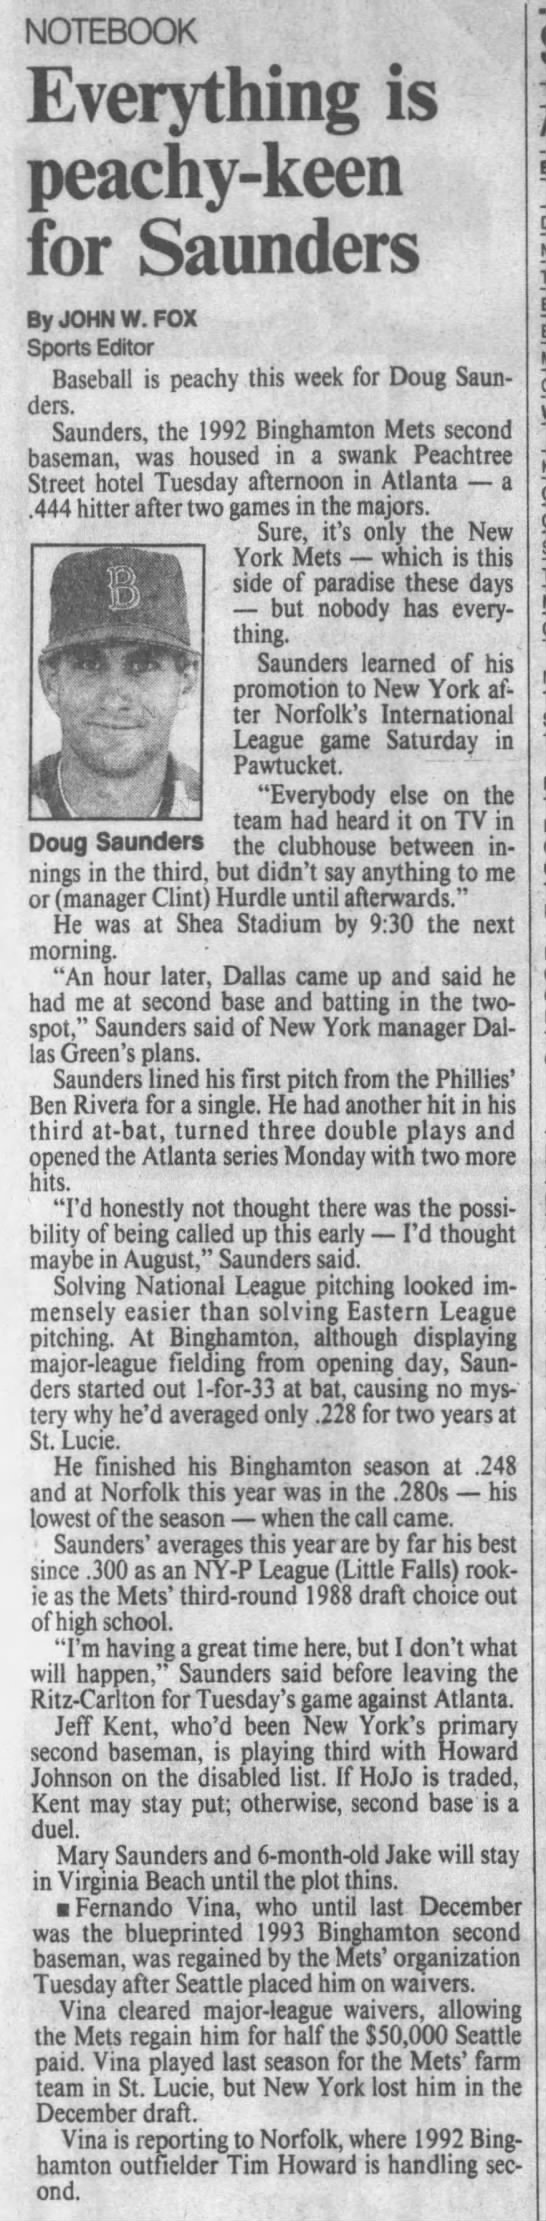 Doug Saunders - June 16, 1993 - Greatest21Days.com - 